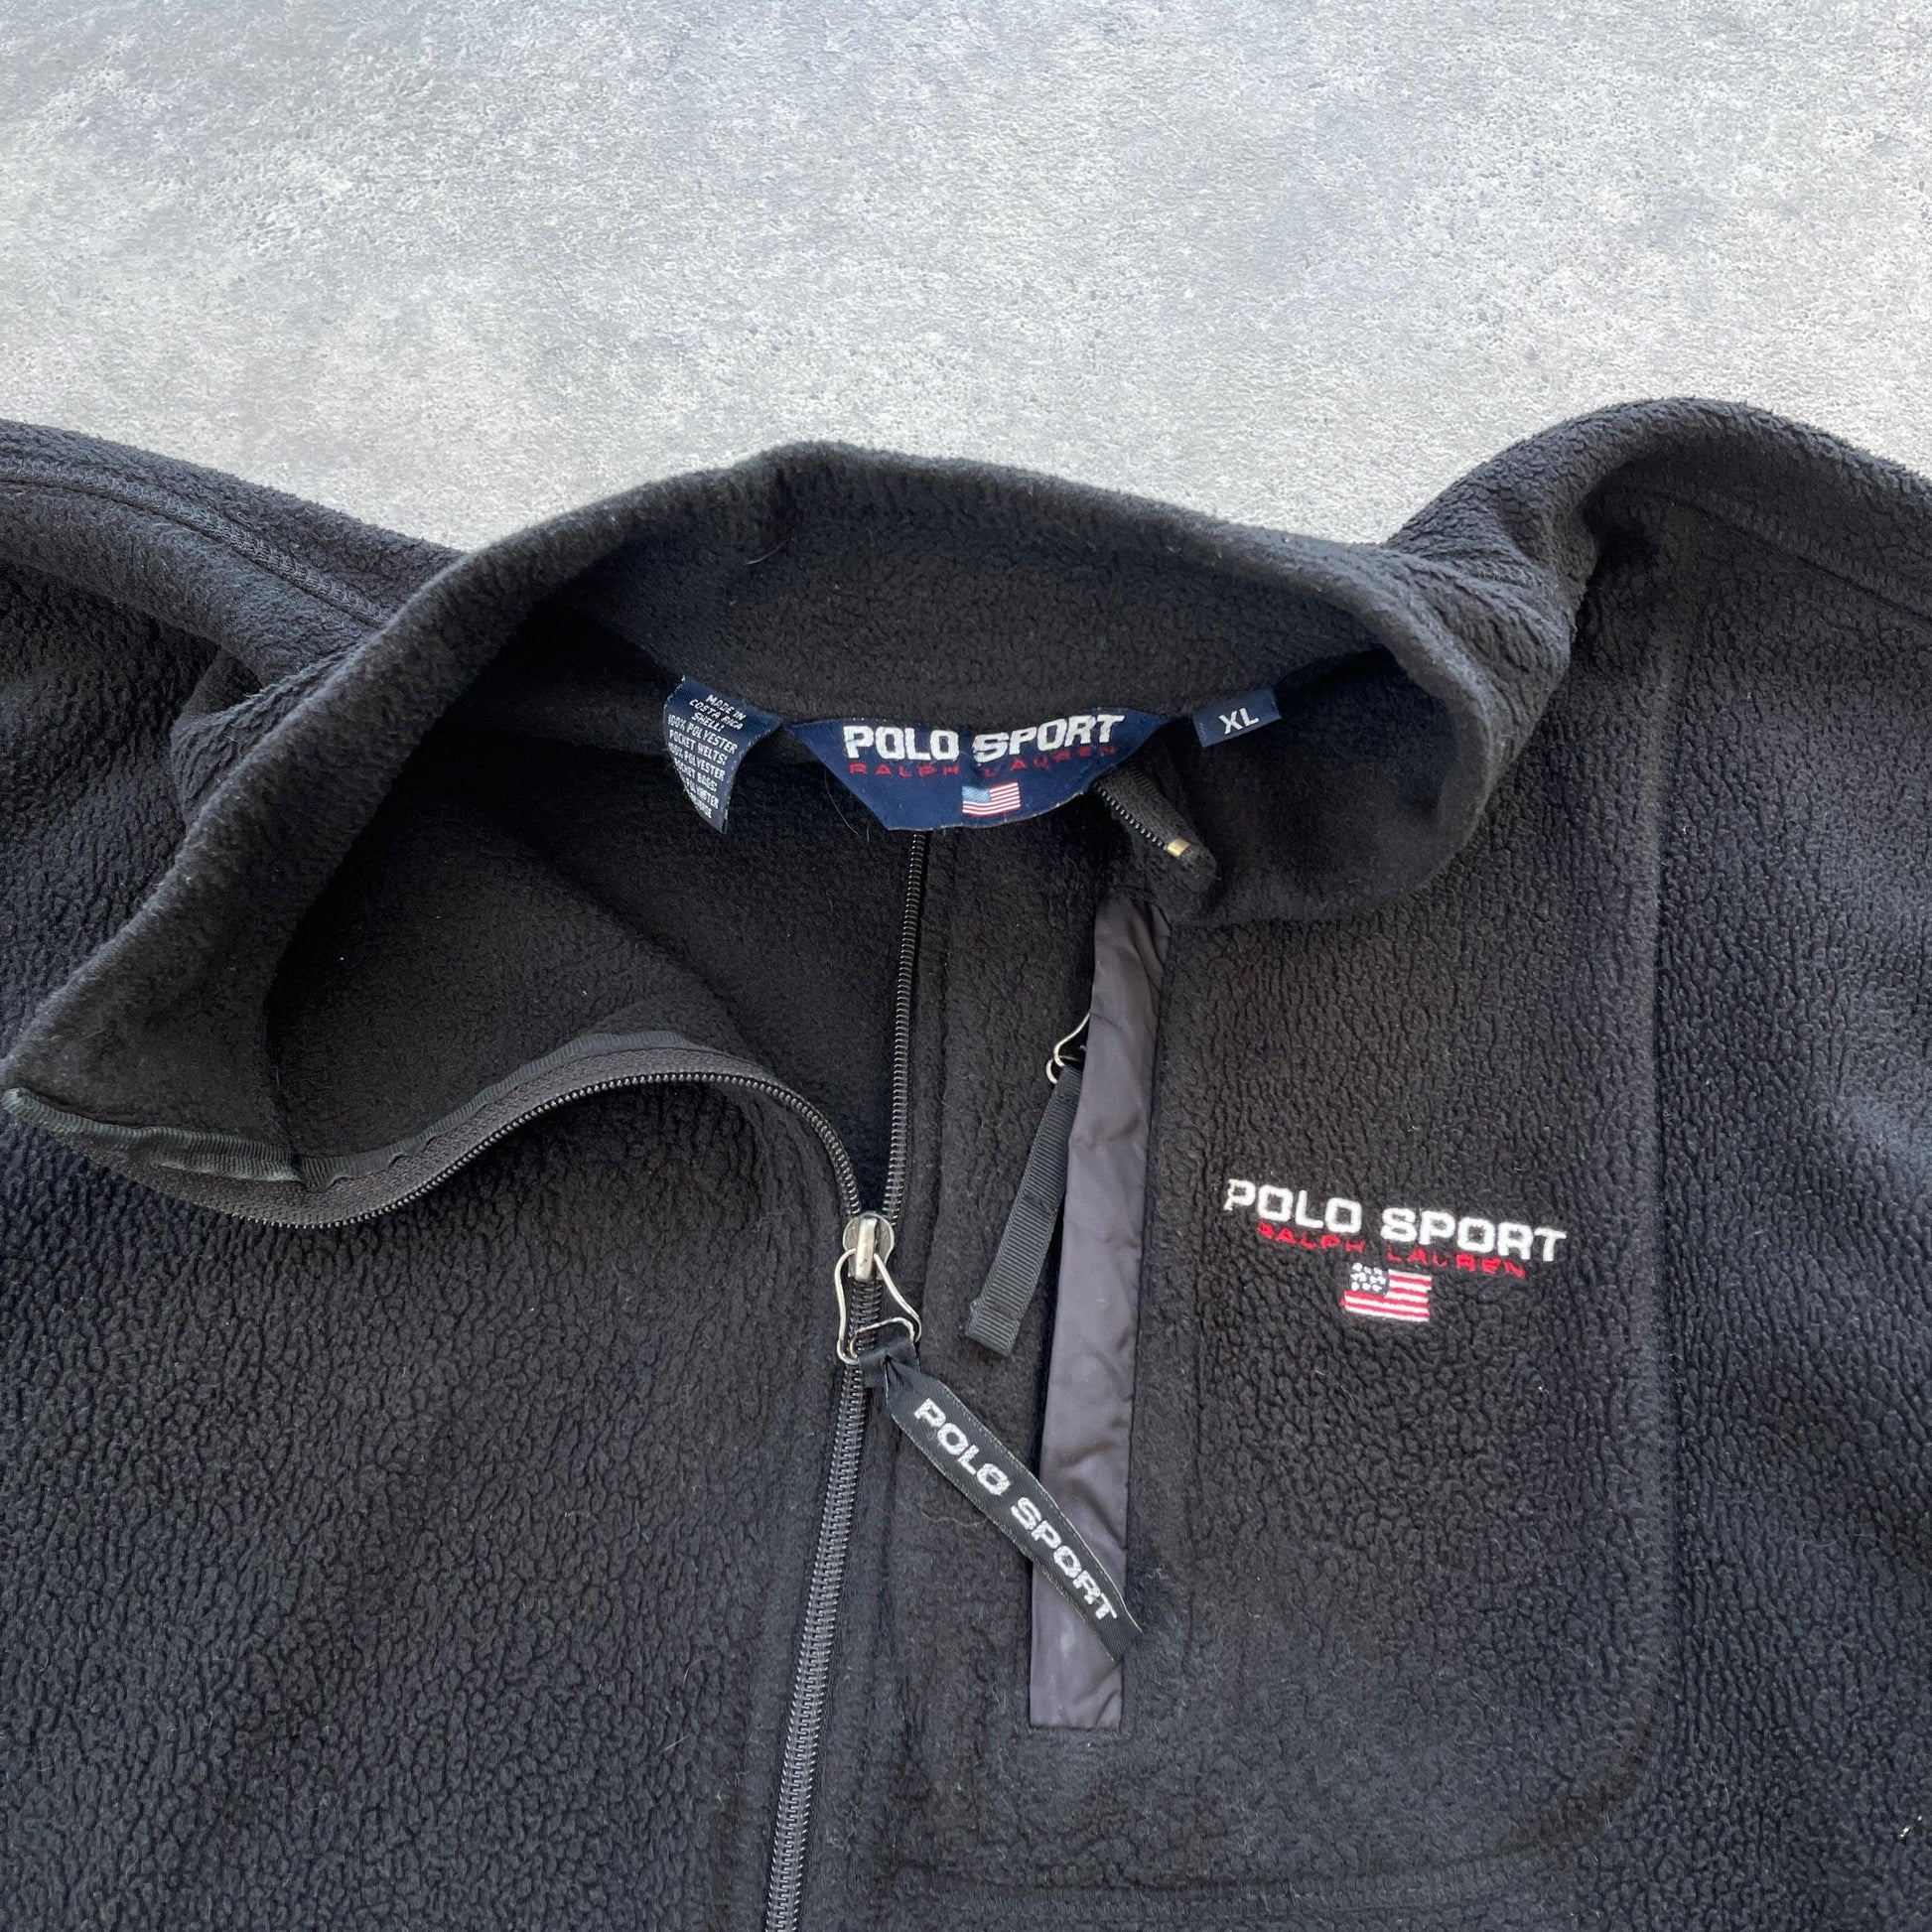 Polo Sport Ralph Lauren 1990s heavyweight polartec fleece jacket (XL) - Known Source